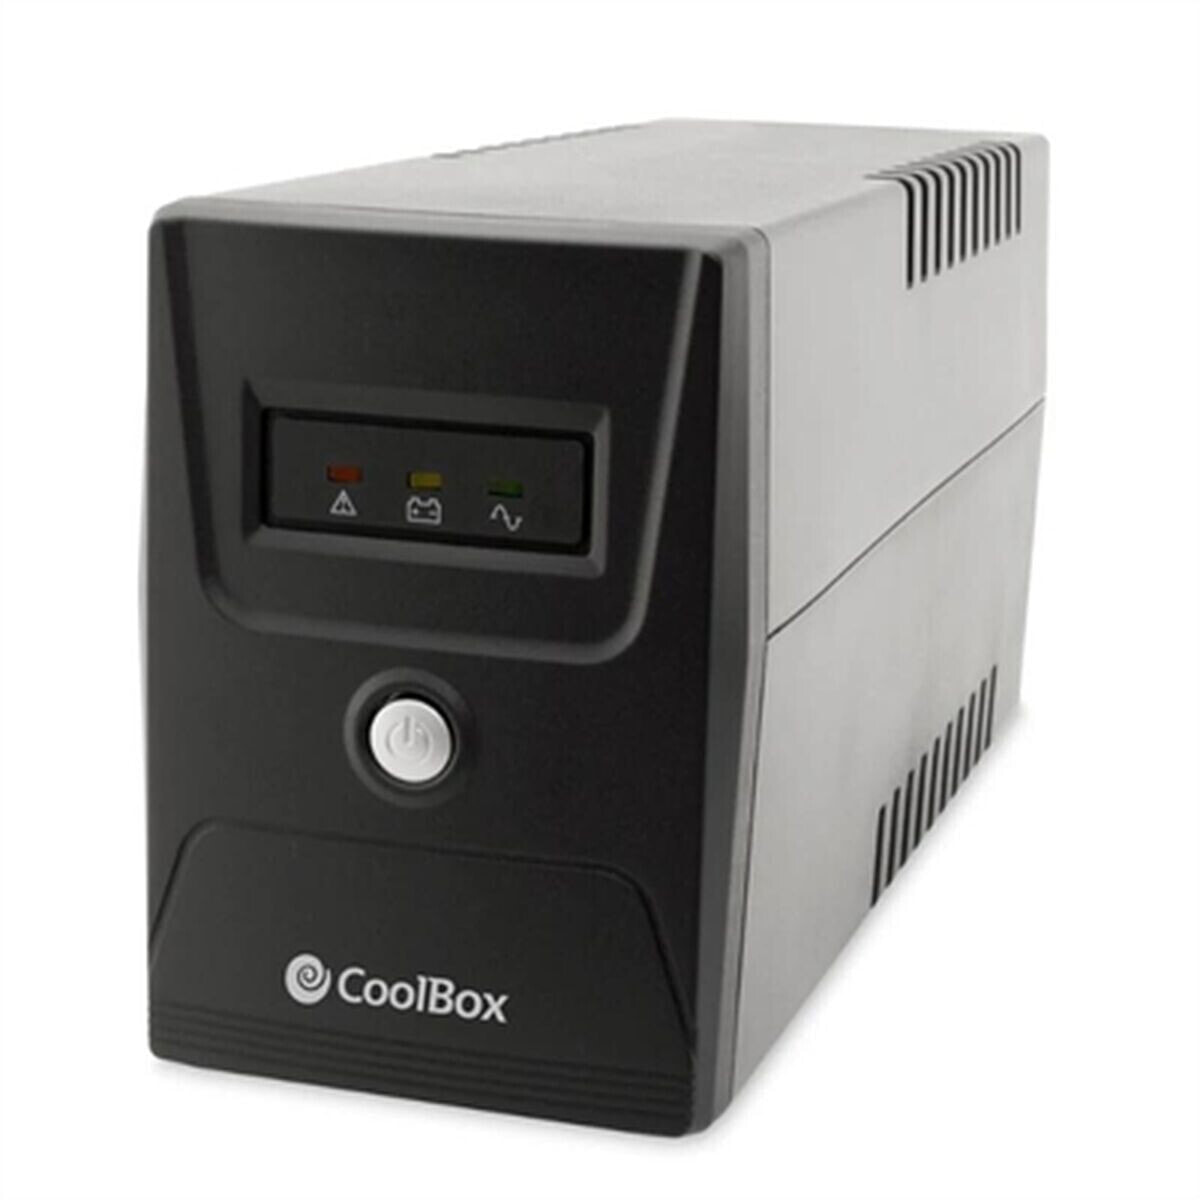 CoolBox SAI Guardian 3 600VA источник бесперебойного питания Ожидание (оффлайн) 0,6 kVA 360 W 2 розетка(и) COO-SAIGD3-600